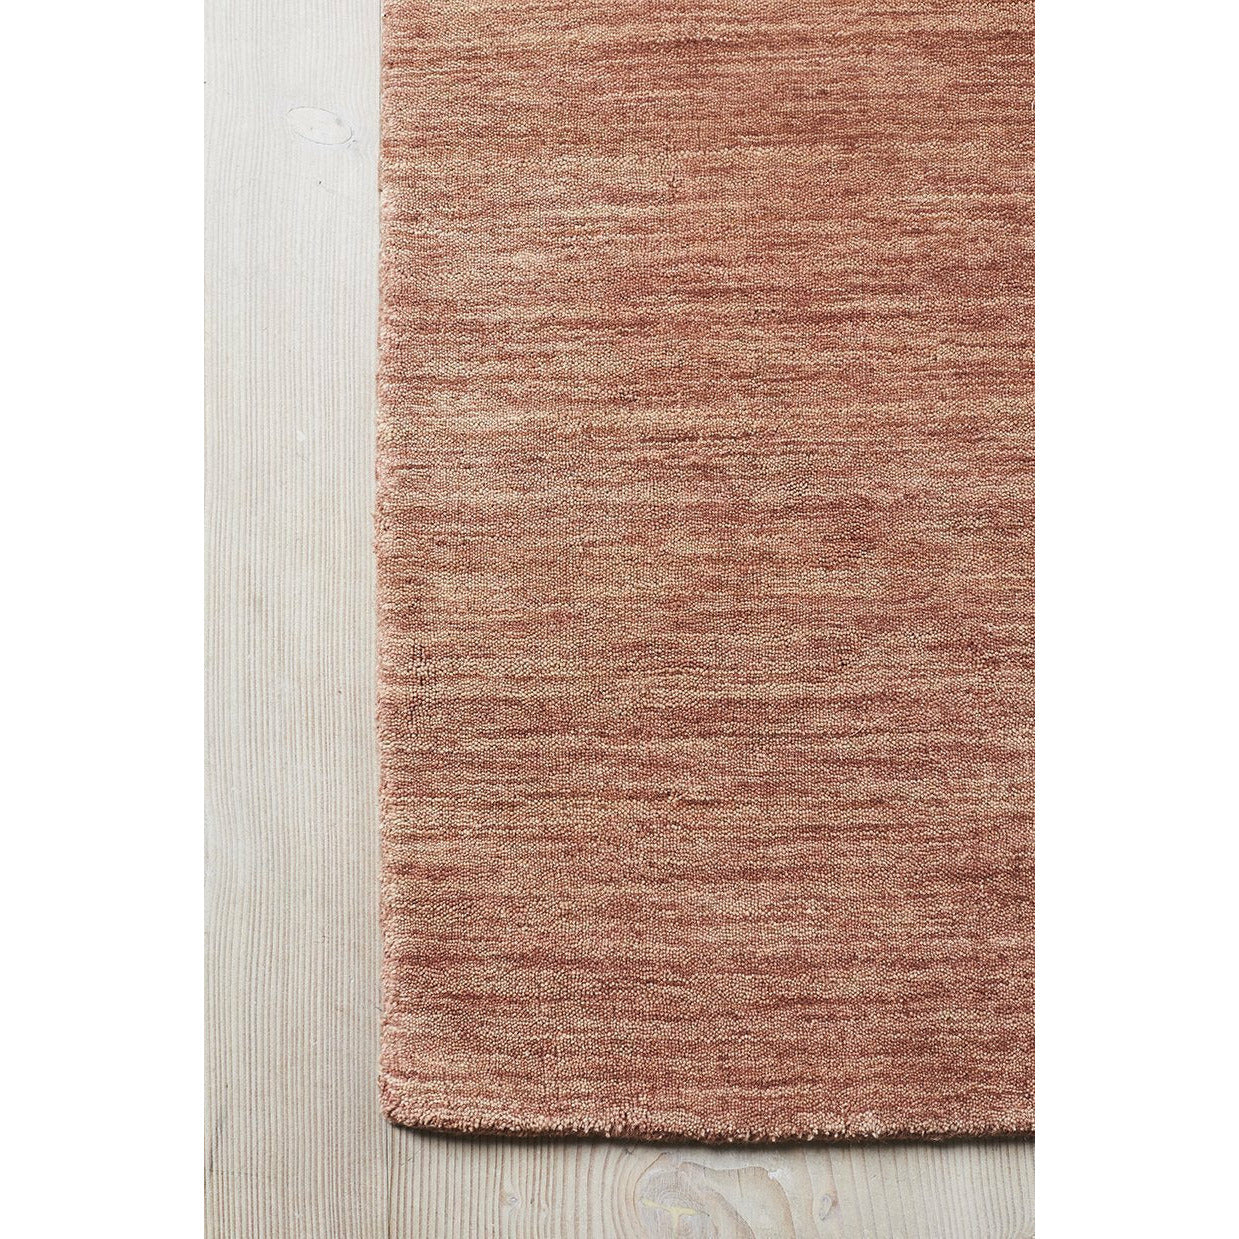 Crema de café de la alfombra de Massimo Earth, 250x300 cm